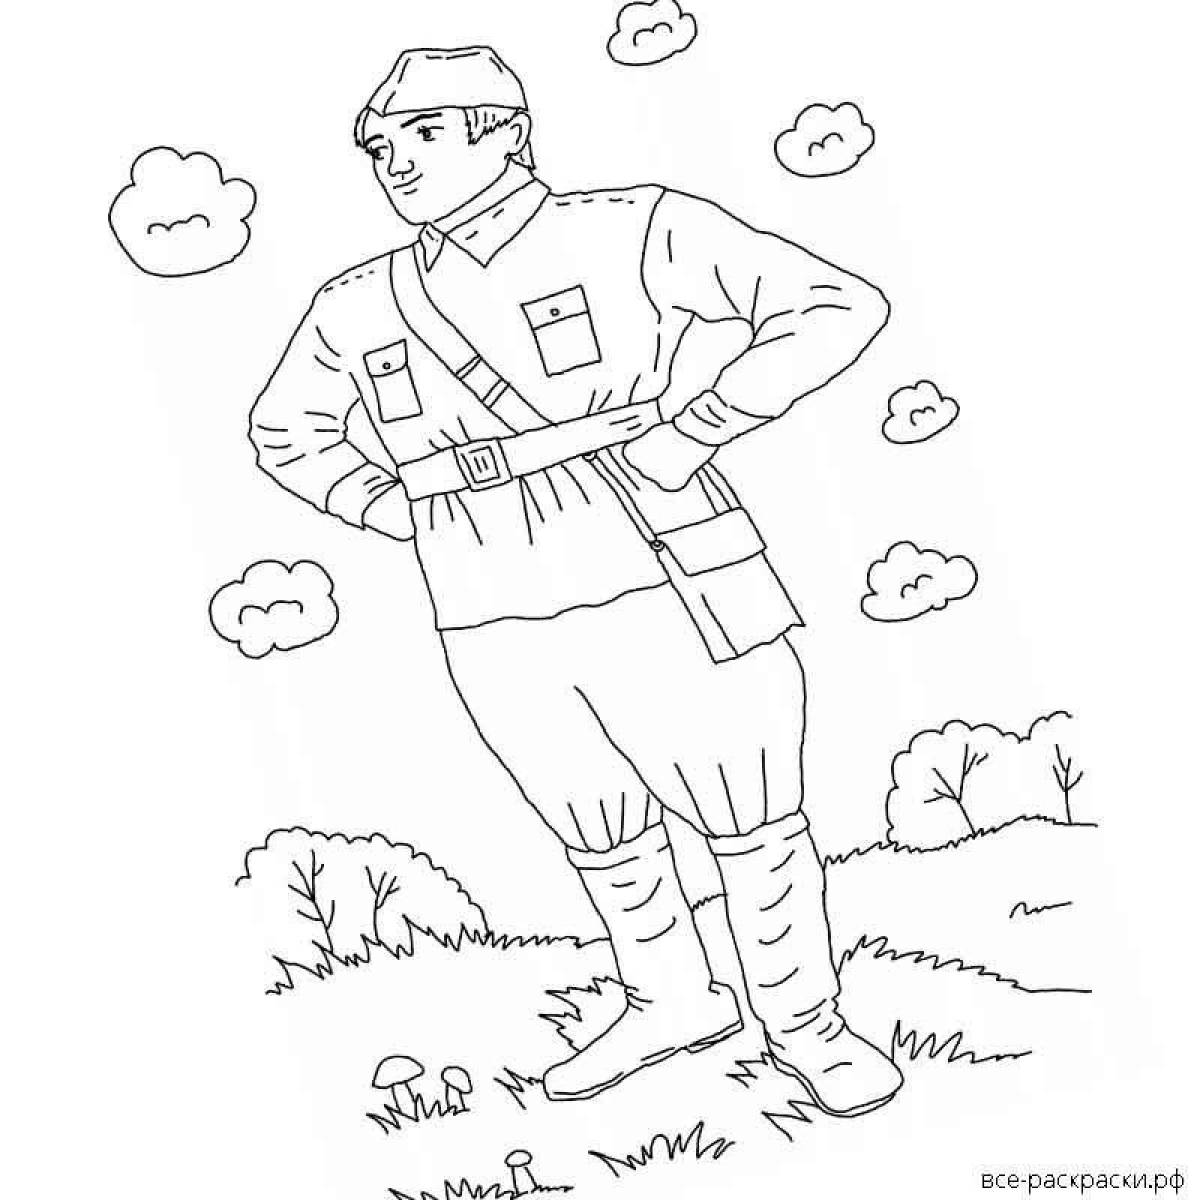 Joyful coloring letter template soldier